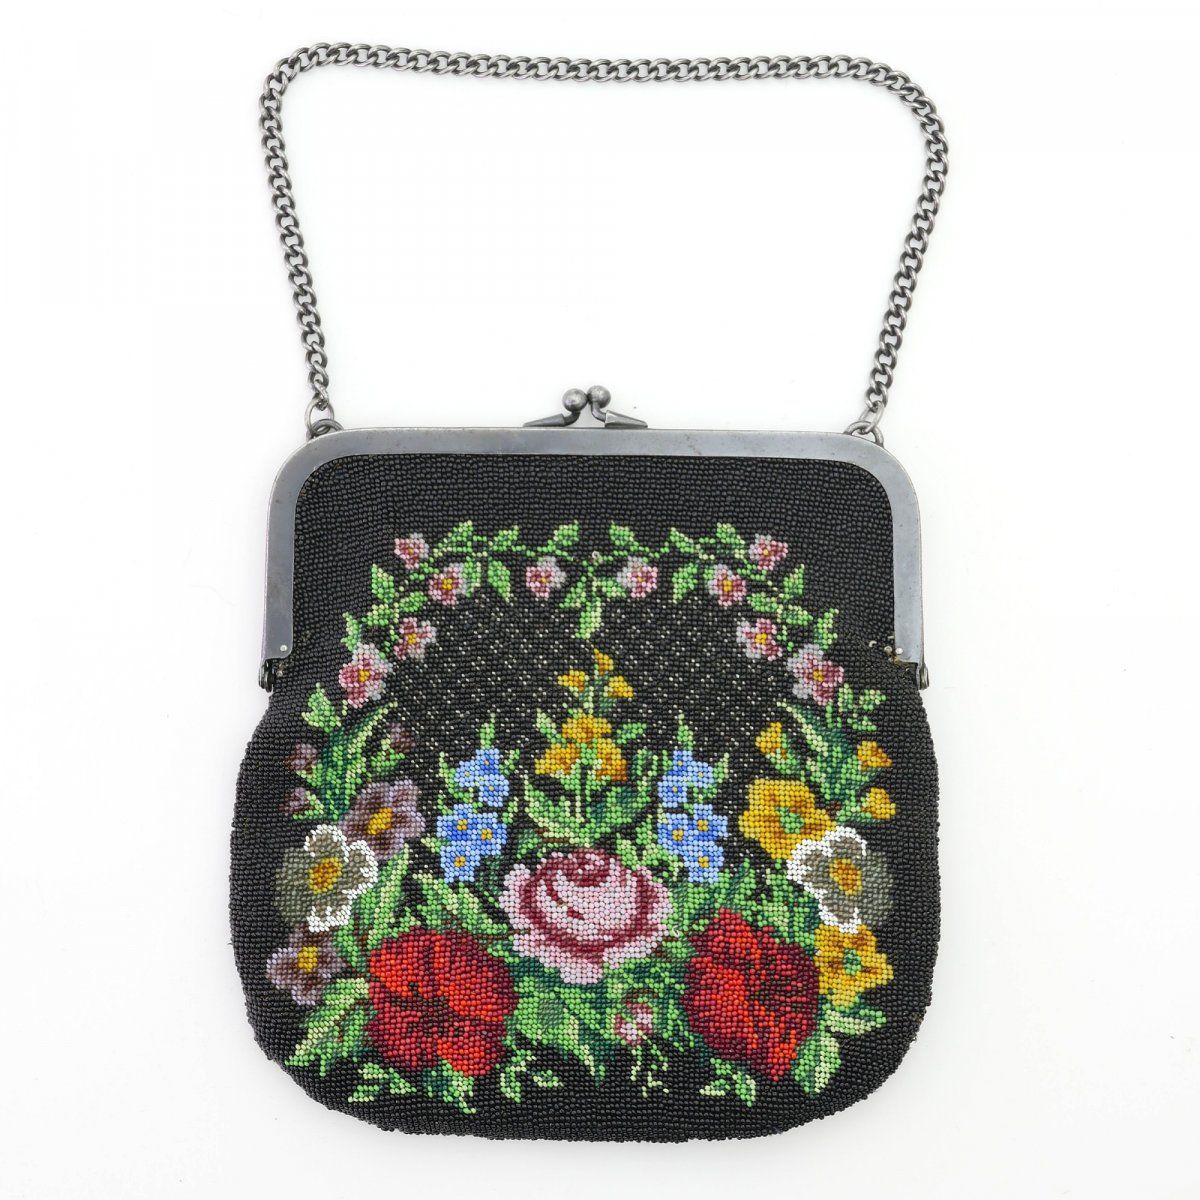 Null Bag with flower motif, c. 1900, H. 18.5 x 17 cm. Polychrome beadwork, leath&hellip;